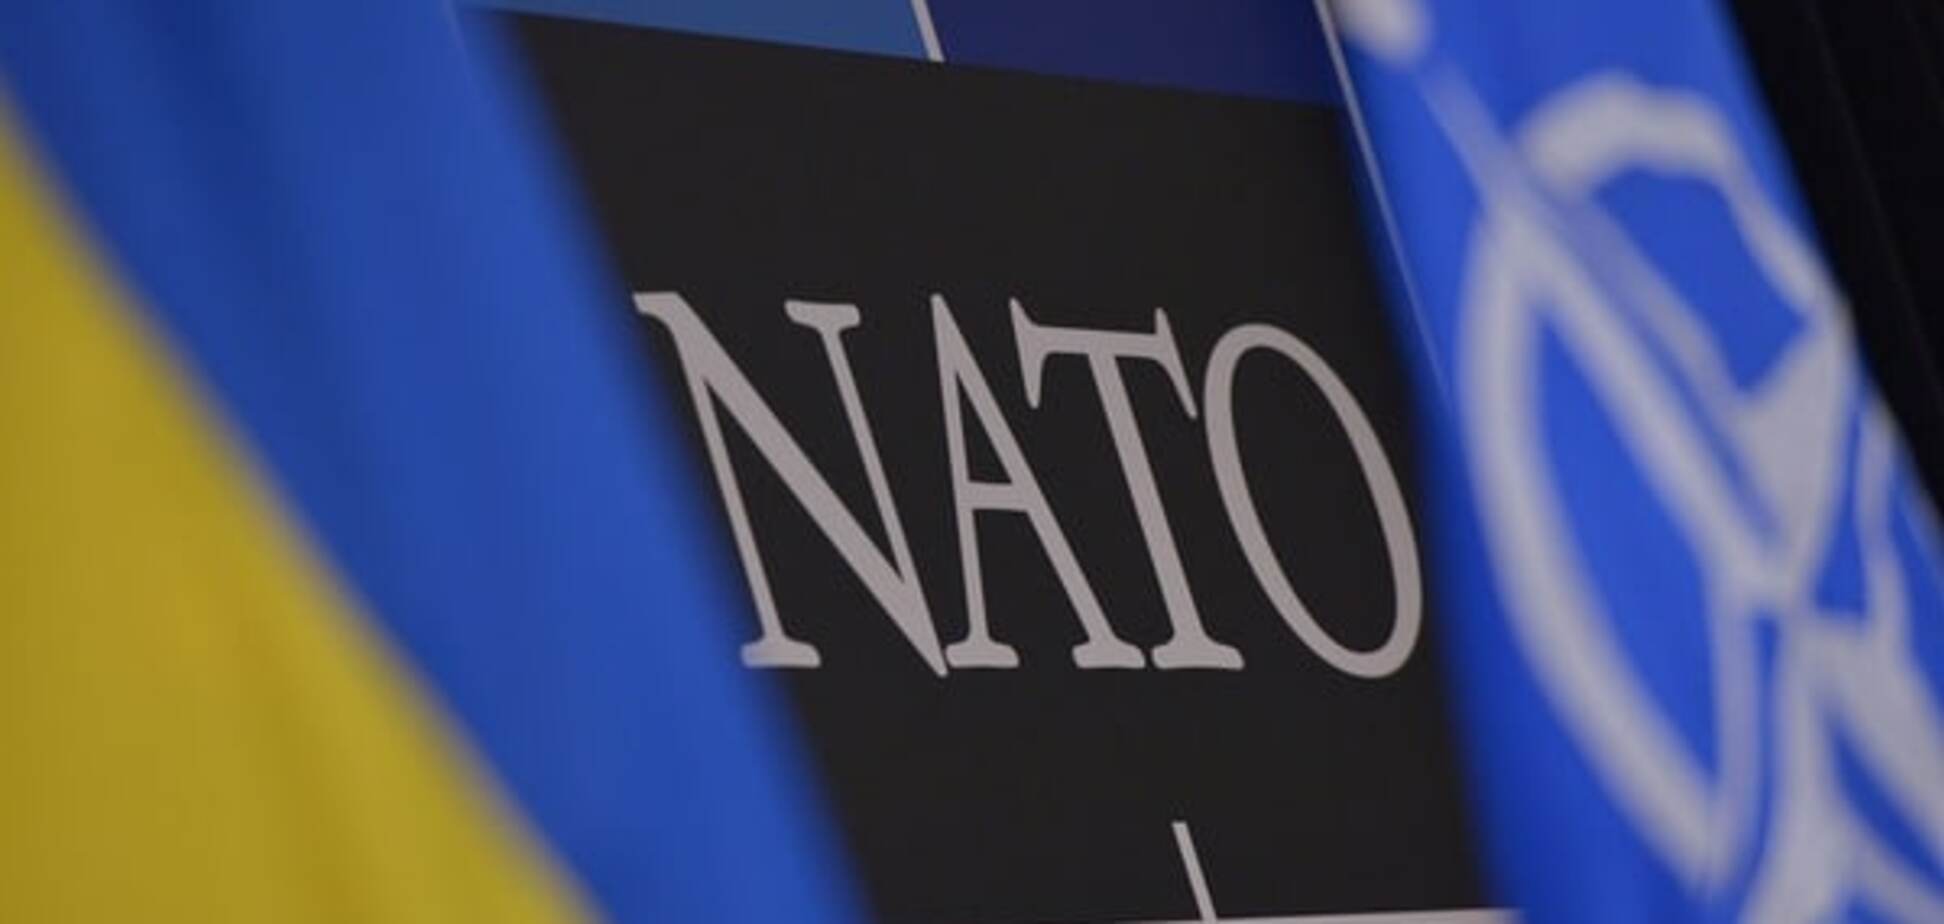 Прапори України і НАТО